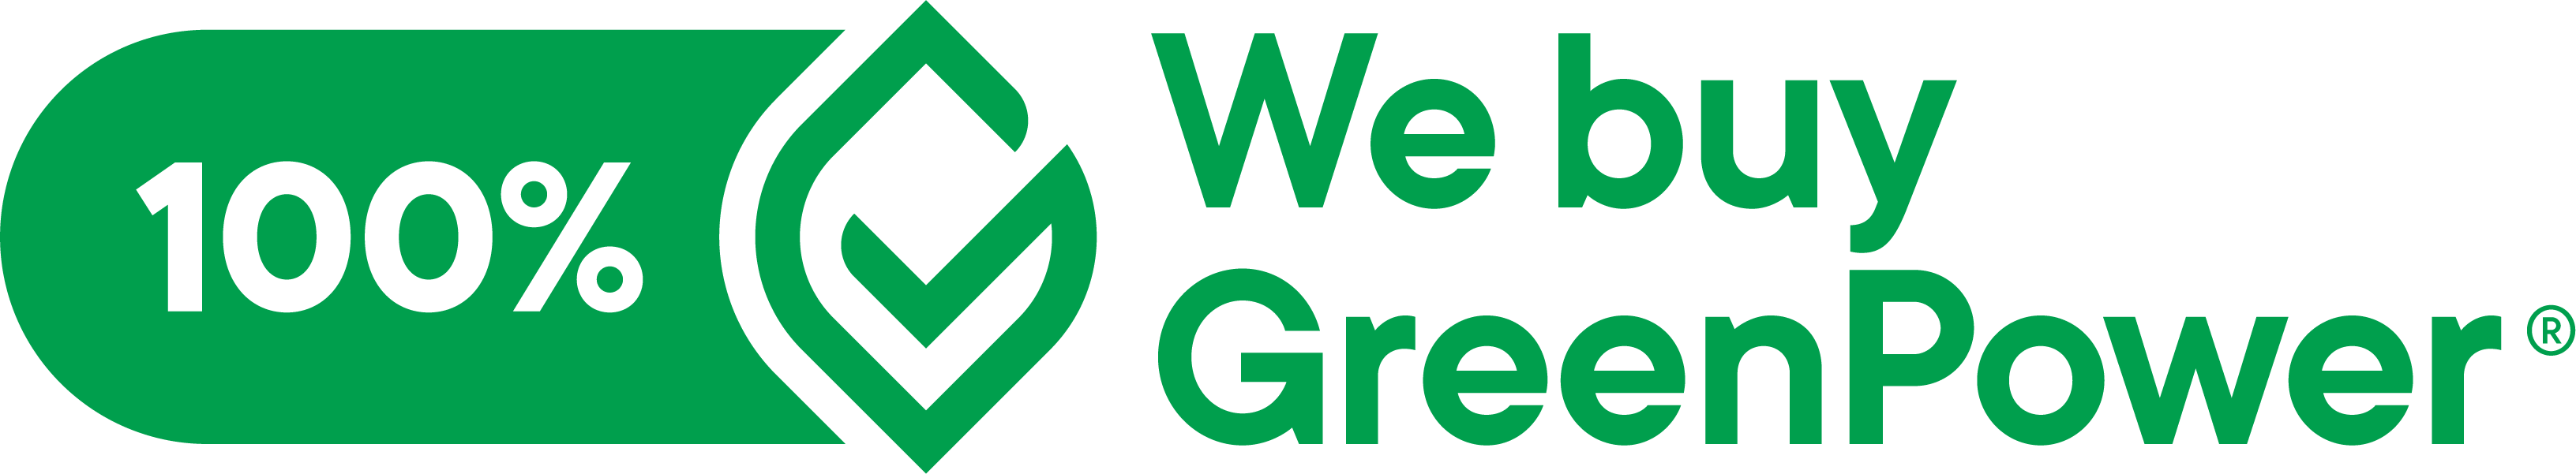 We buy GreenPower